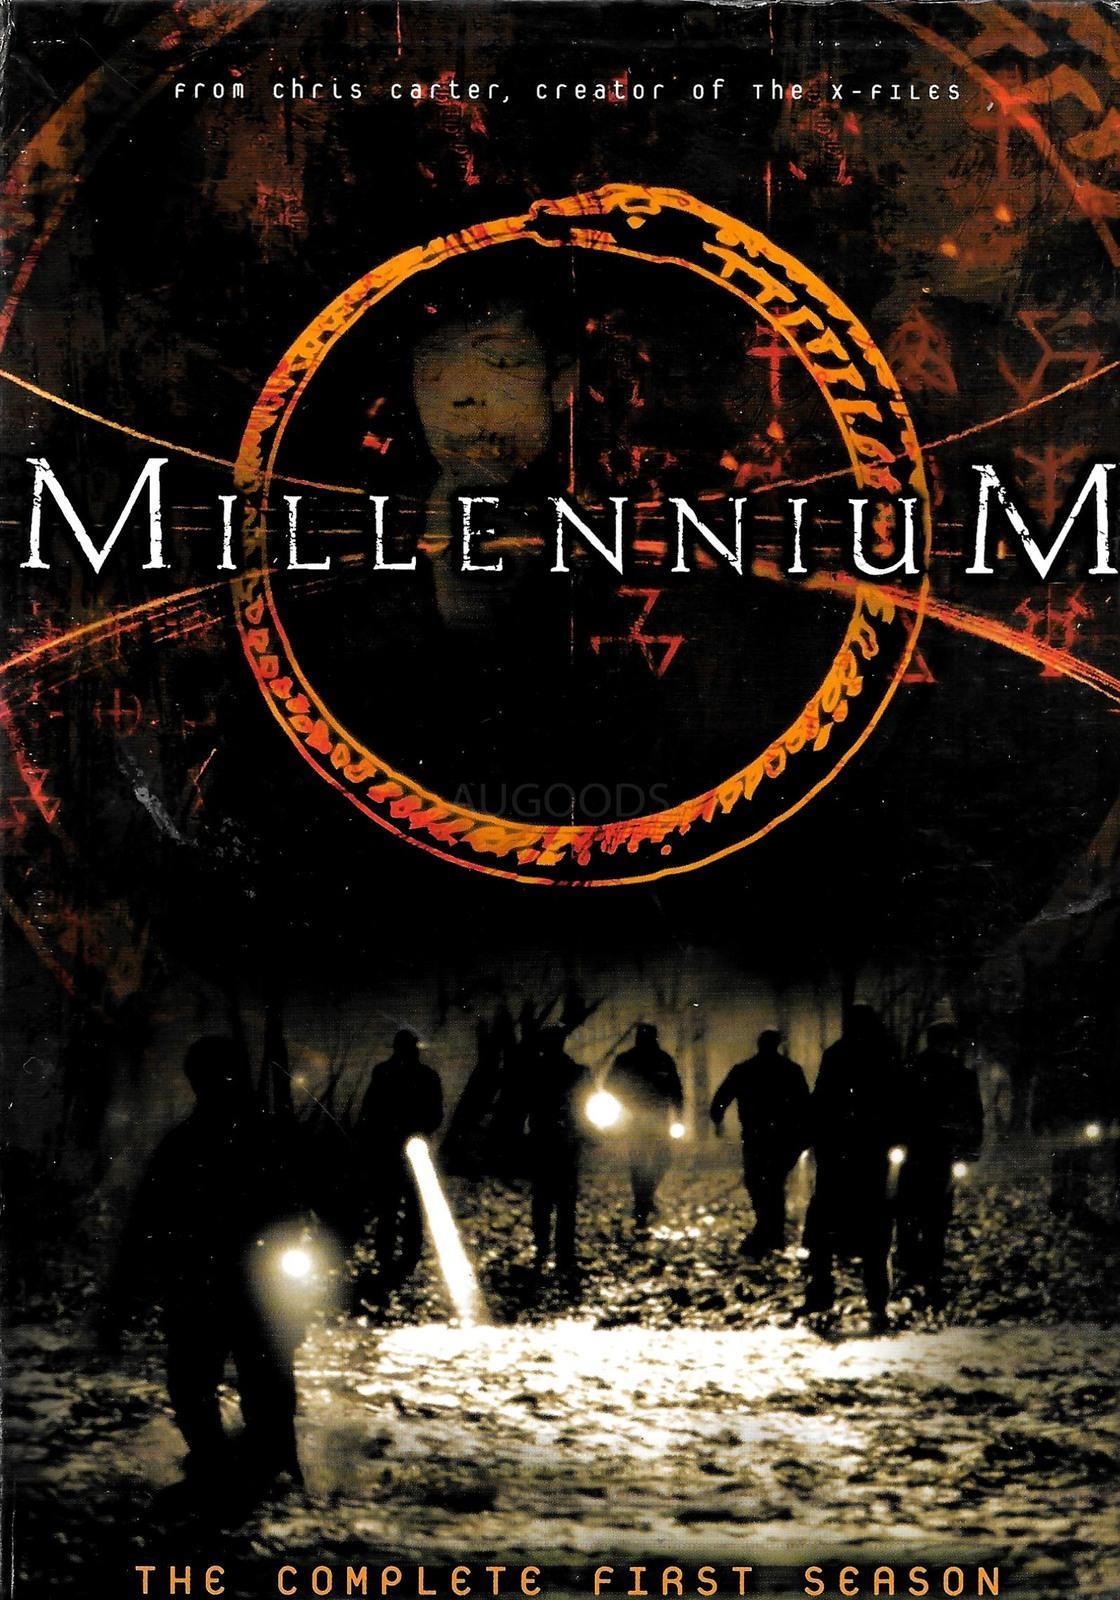 MILLENNIUM - SEASON ONE - DVD Series Rare Aus Stock Preowned: Excellent Condition